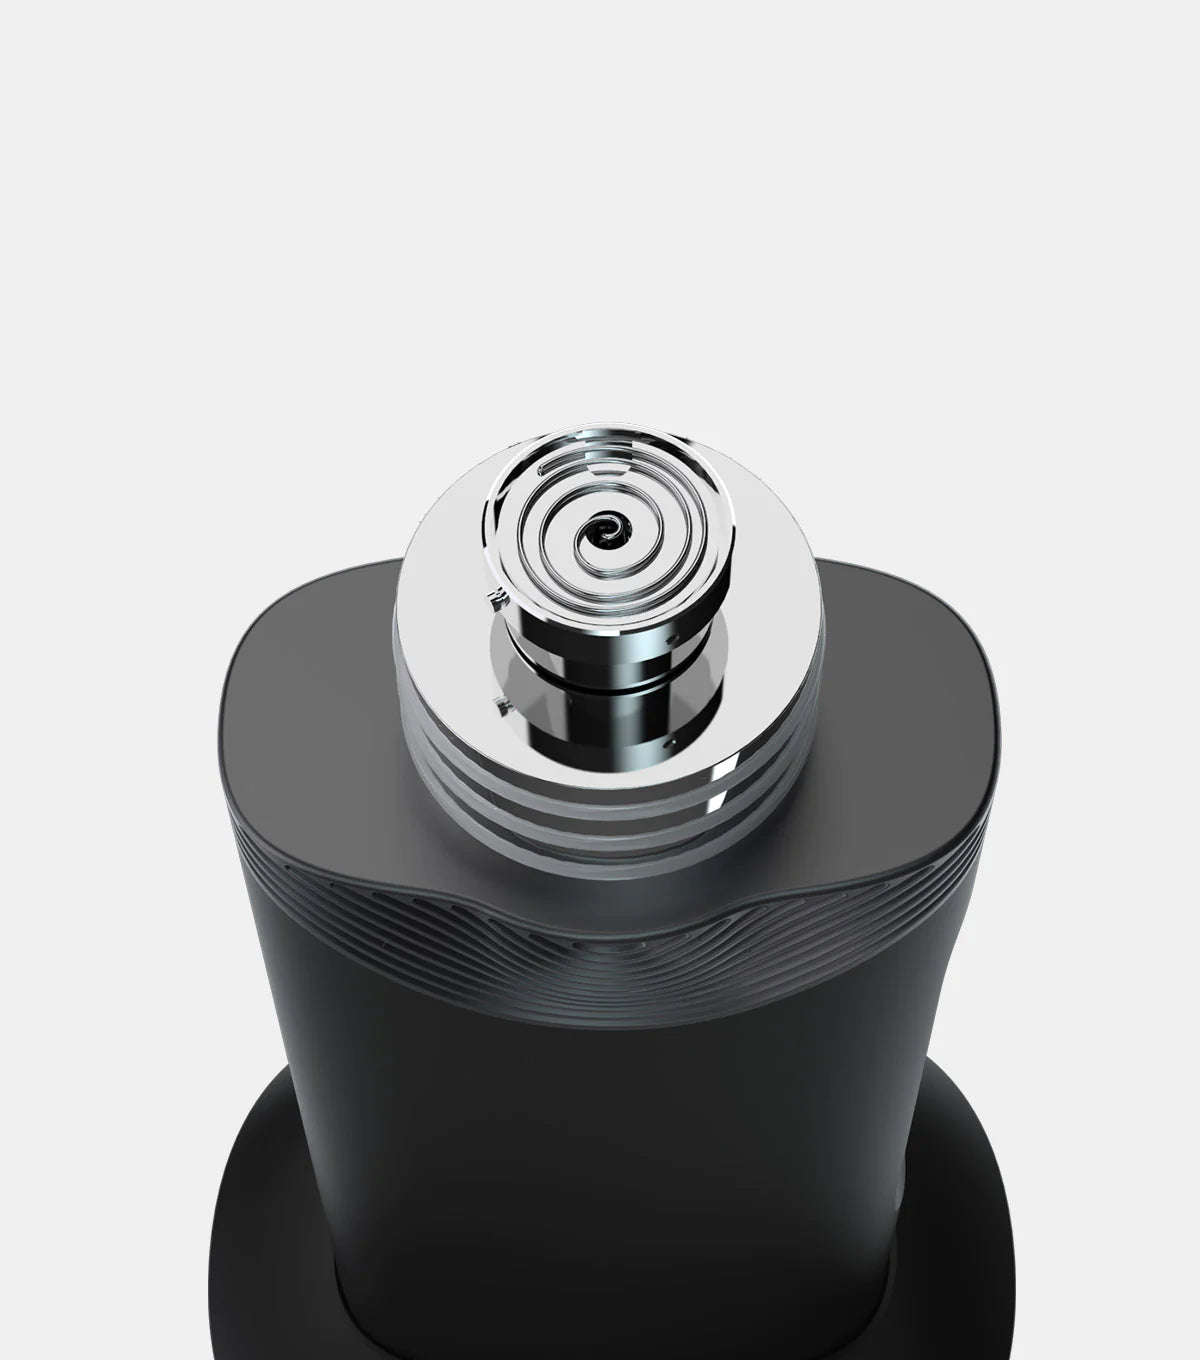 AUXO Cira Vaporizer in Black, Portable Design for Concentrates, Top View